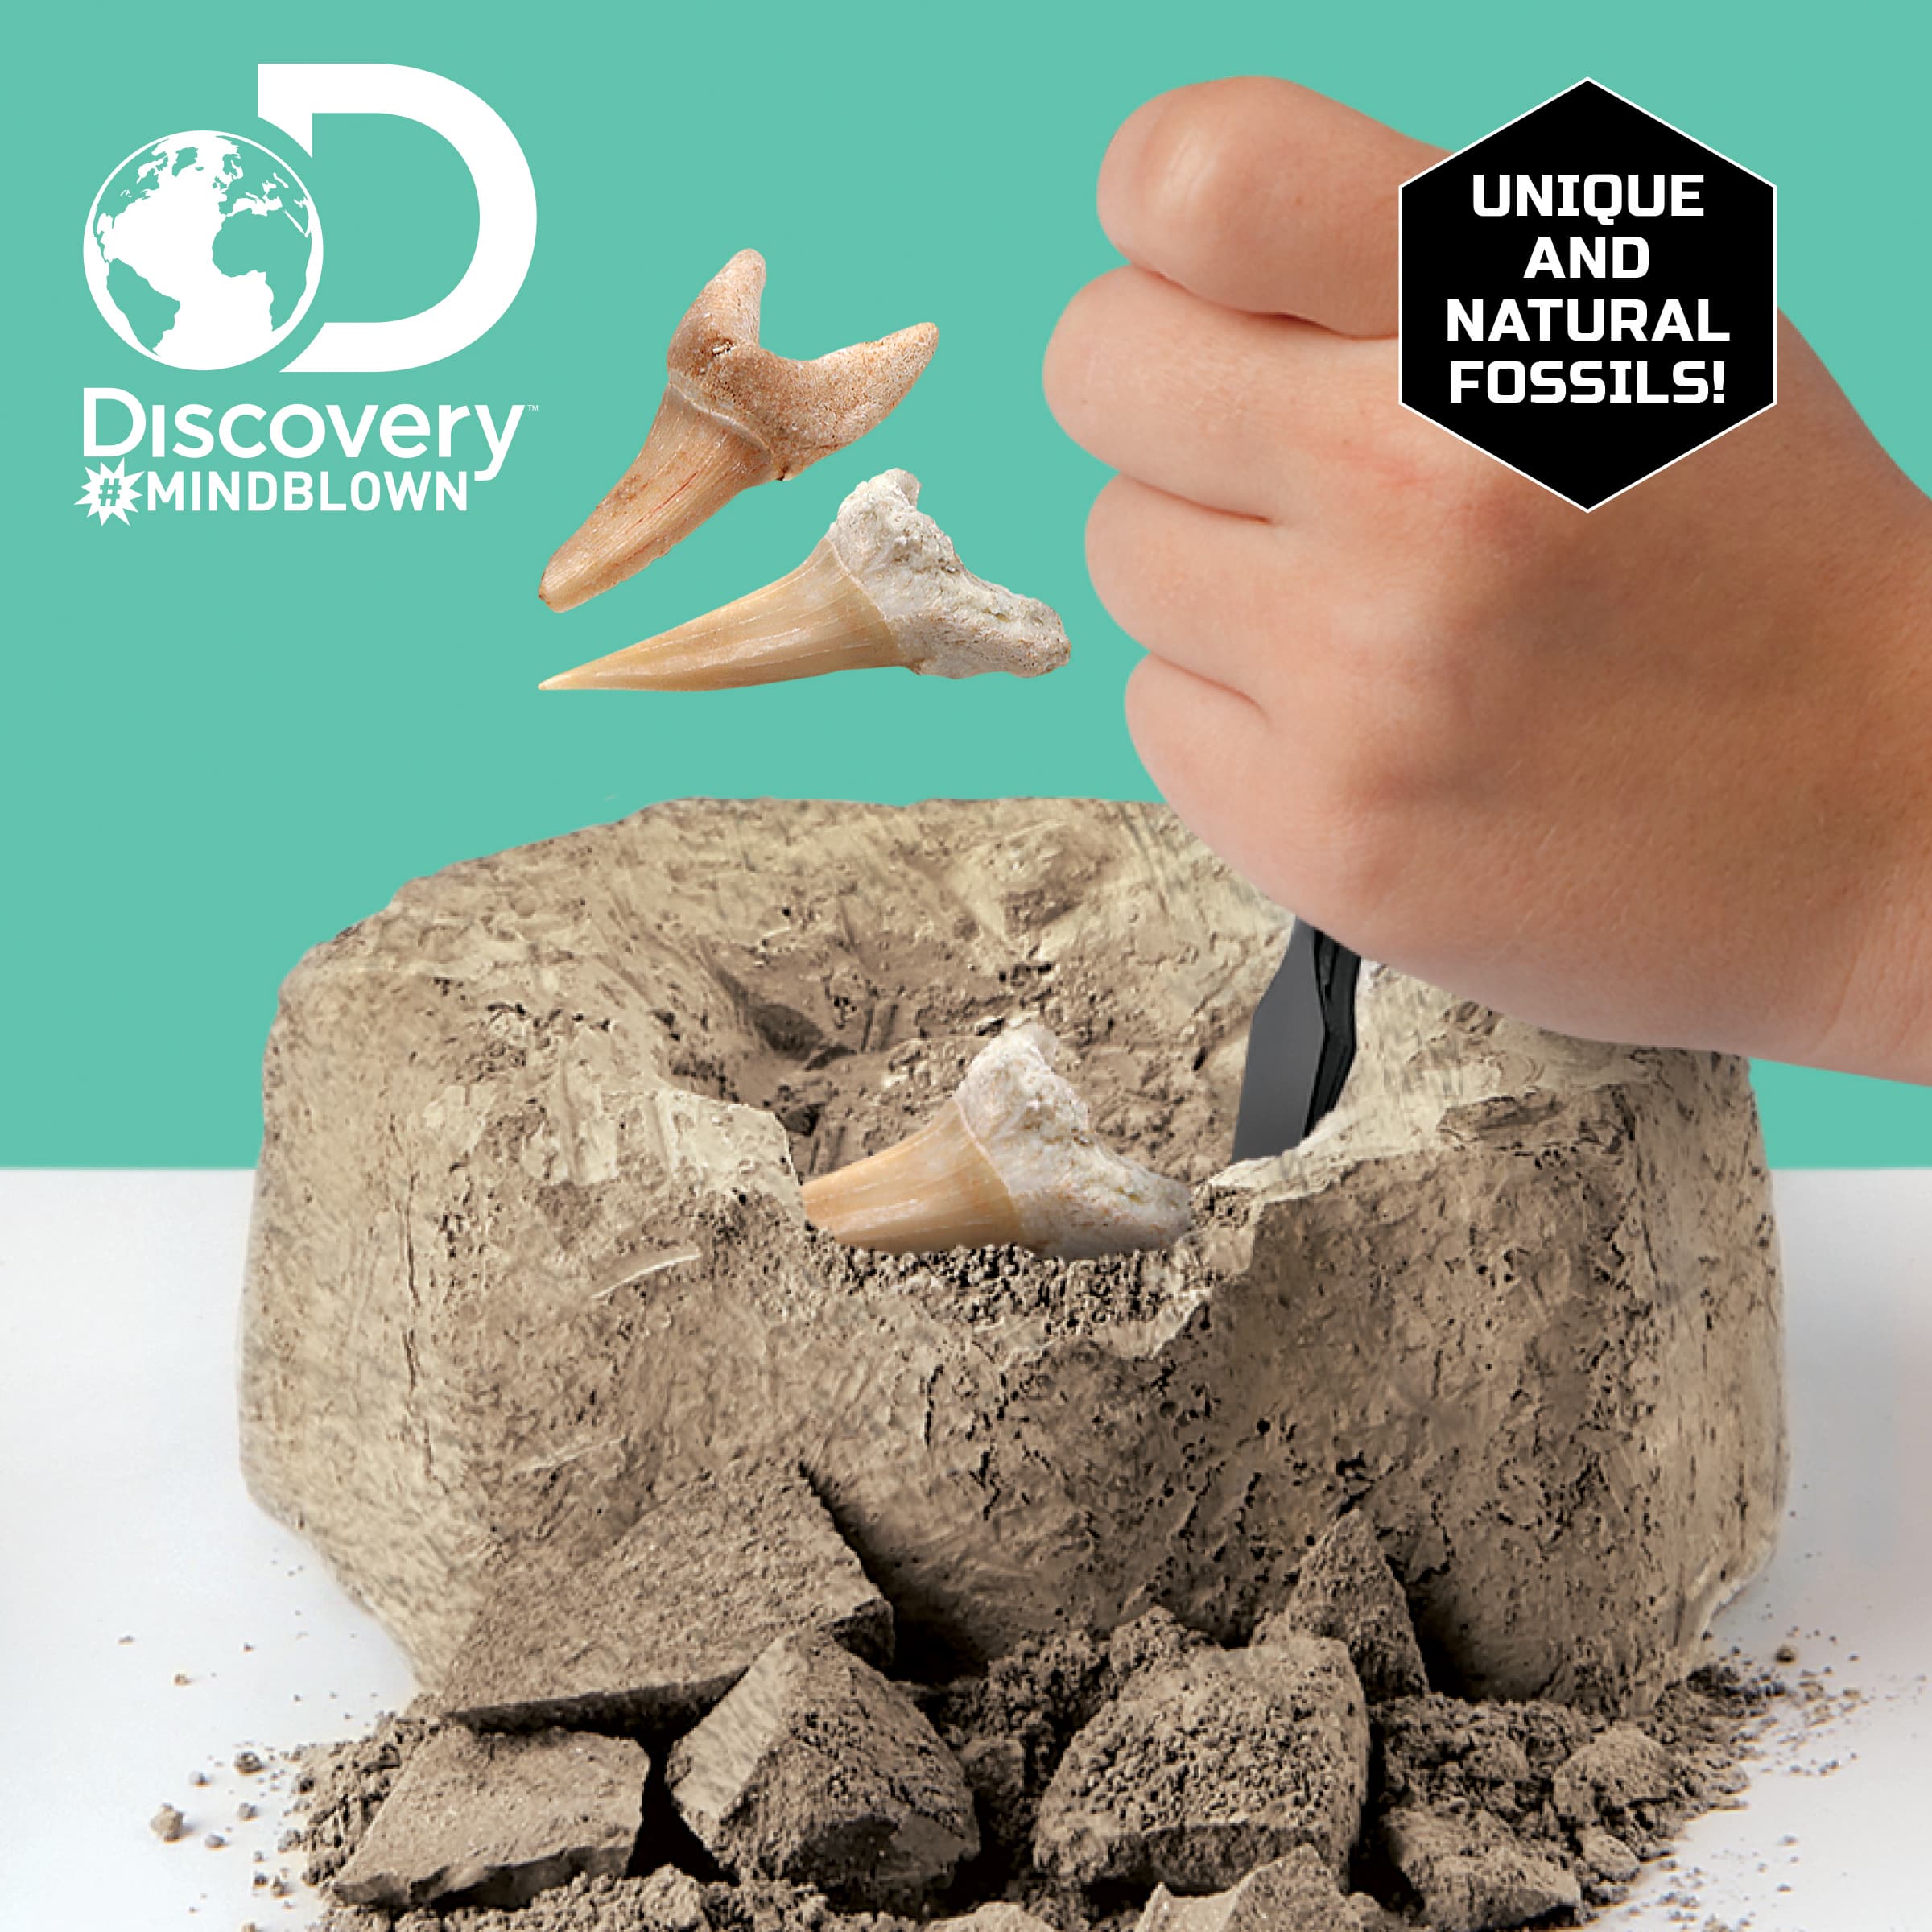 Discovery&#x2122; #Mindblown Shark Teeth Excavation Kit